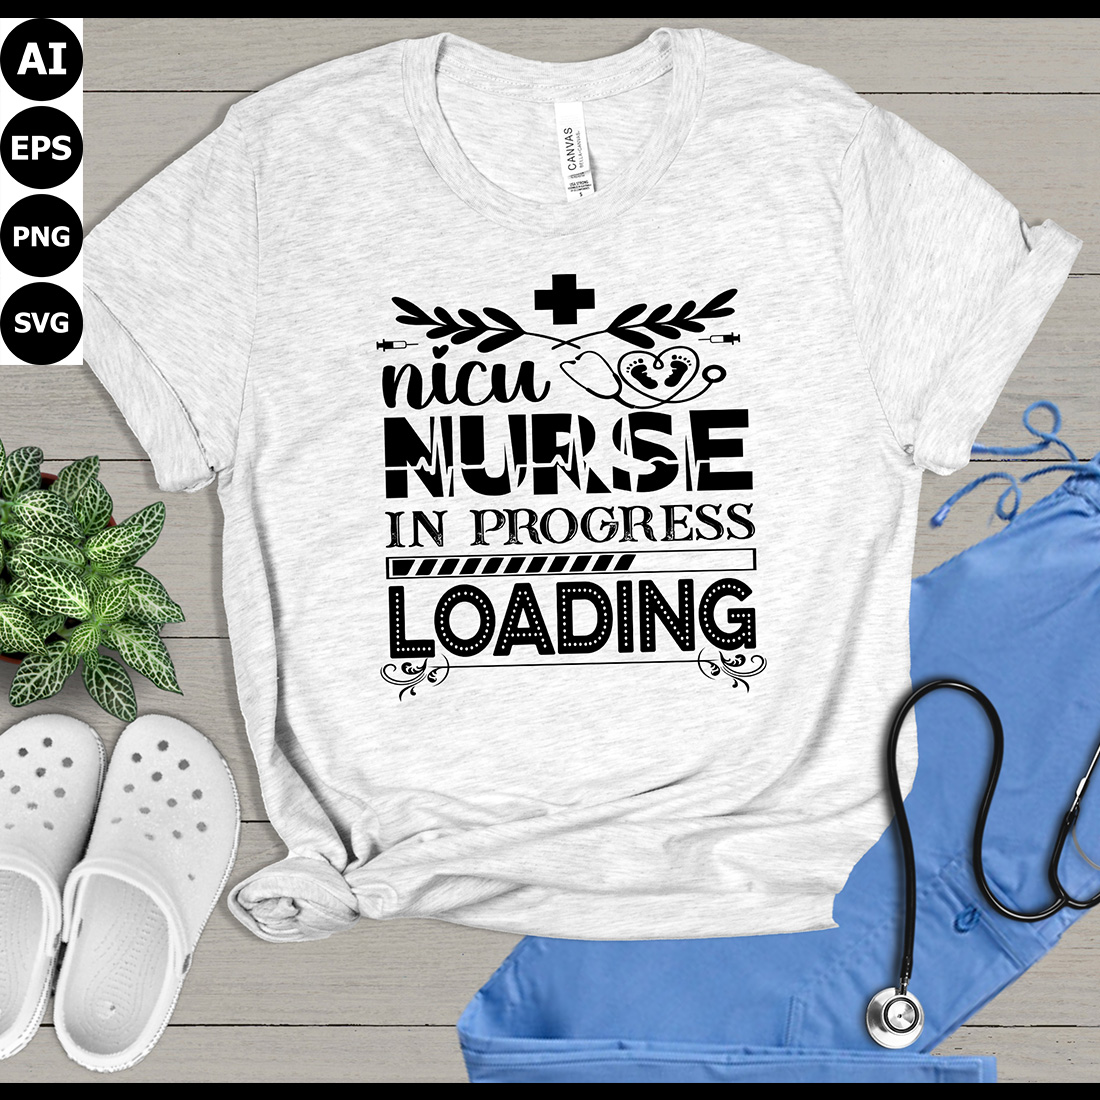 NICU Nurse in progress loading T-shirt design preview image.